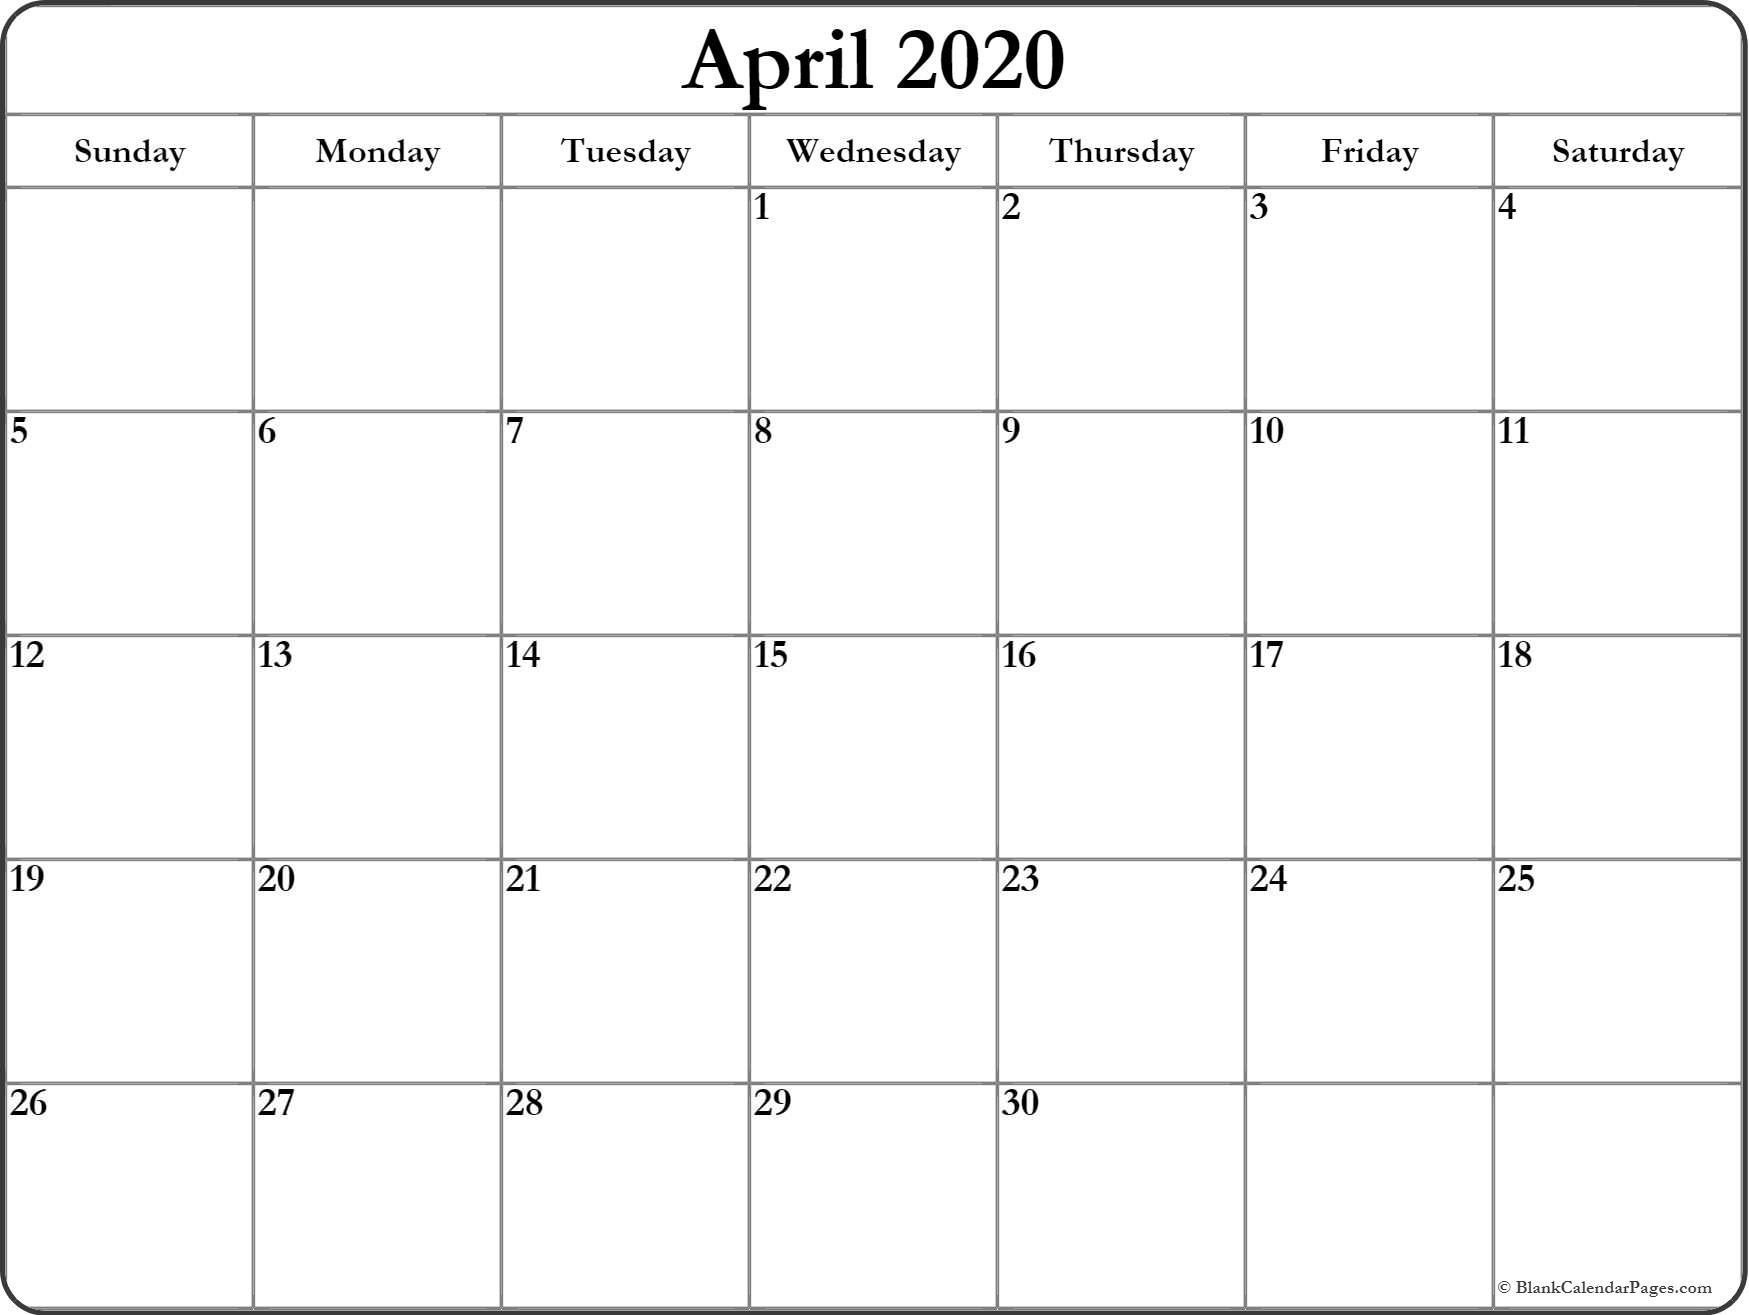 April 2020 Calendar | Free Printable Monthly Calendars-Blank Calendar Worksheet For April 2020